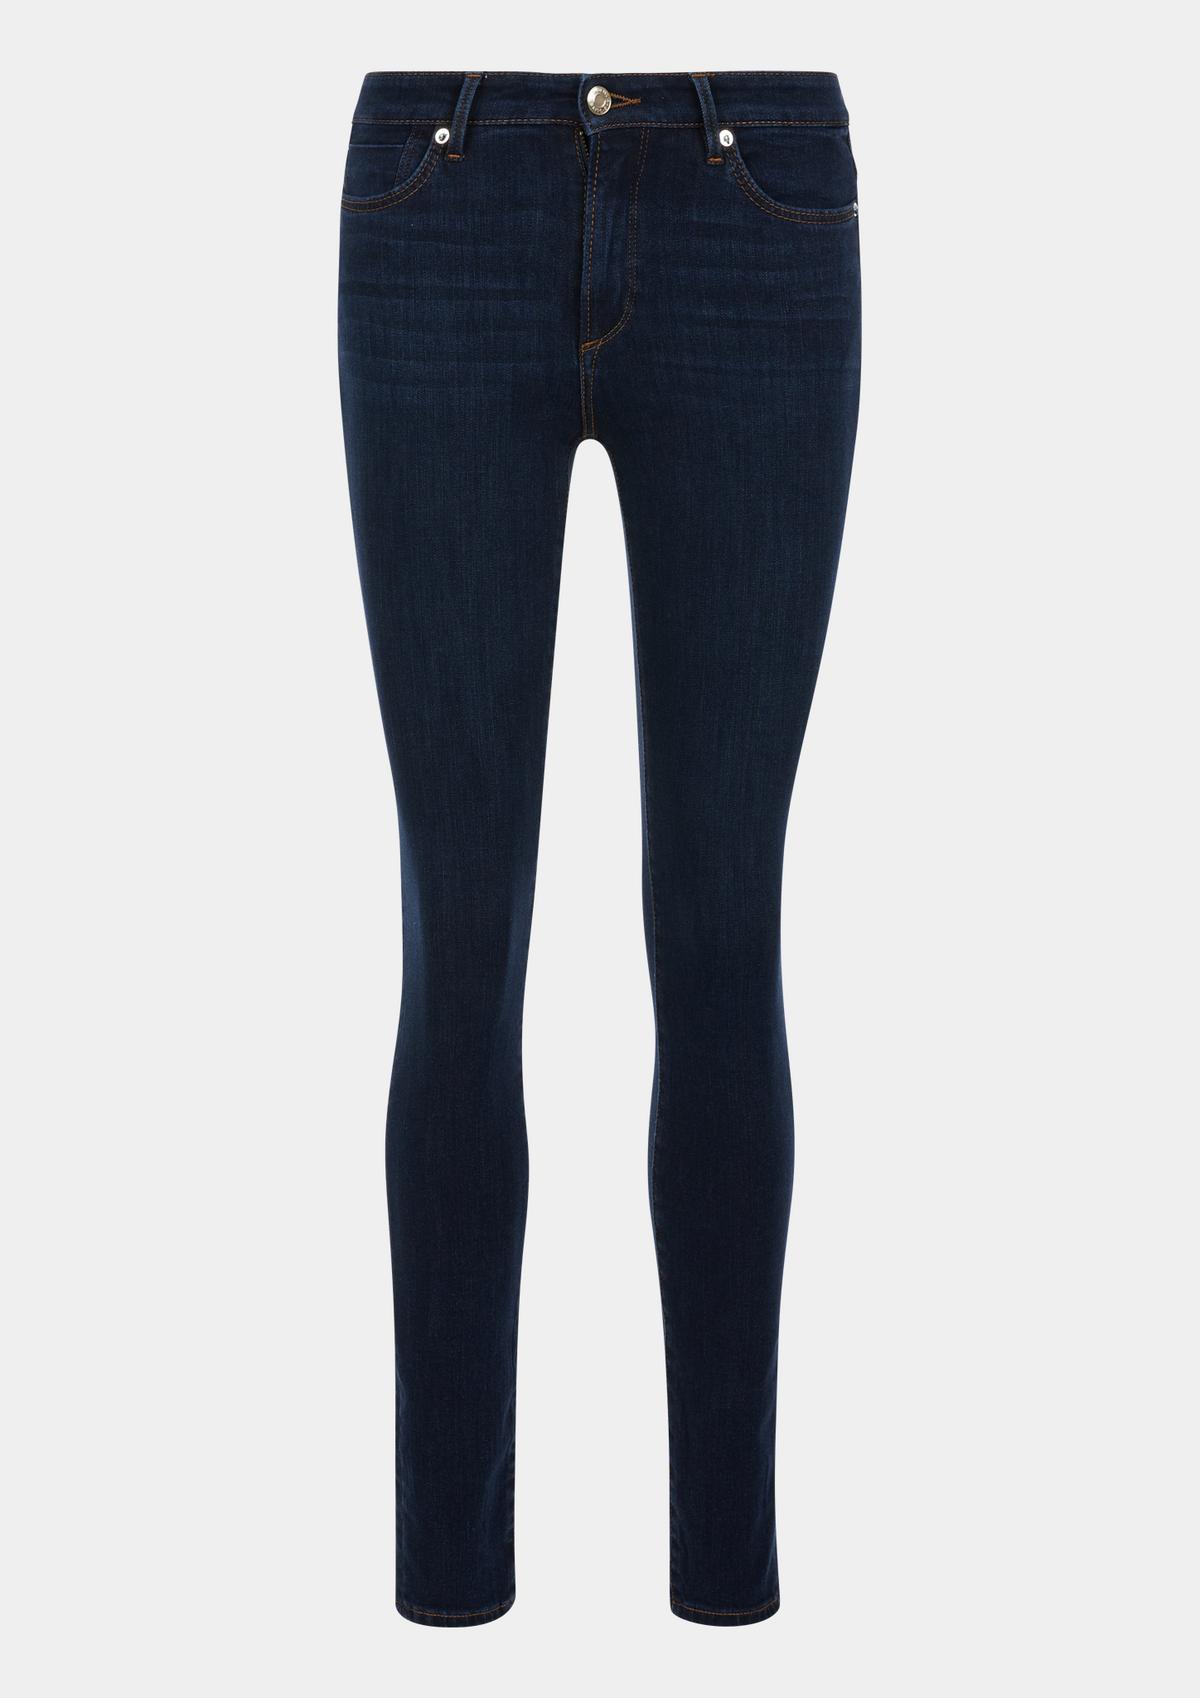 Jeans Izabell / Skinny Fit / Mid Rise / Skinny Leg